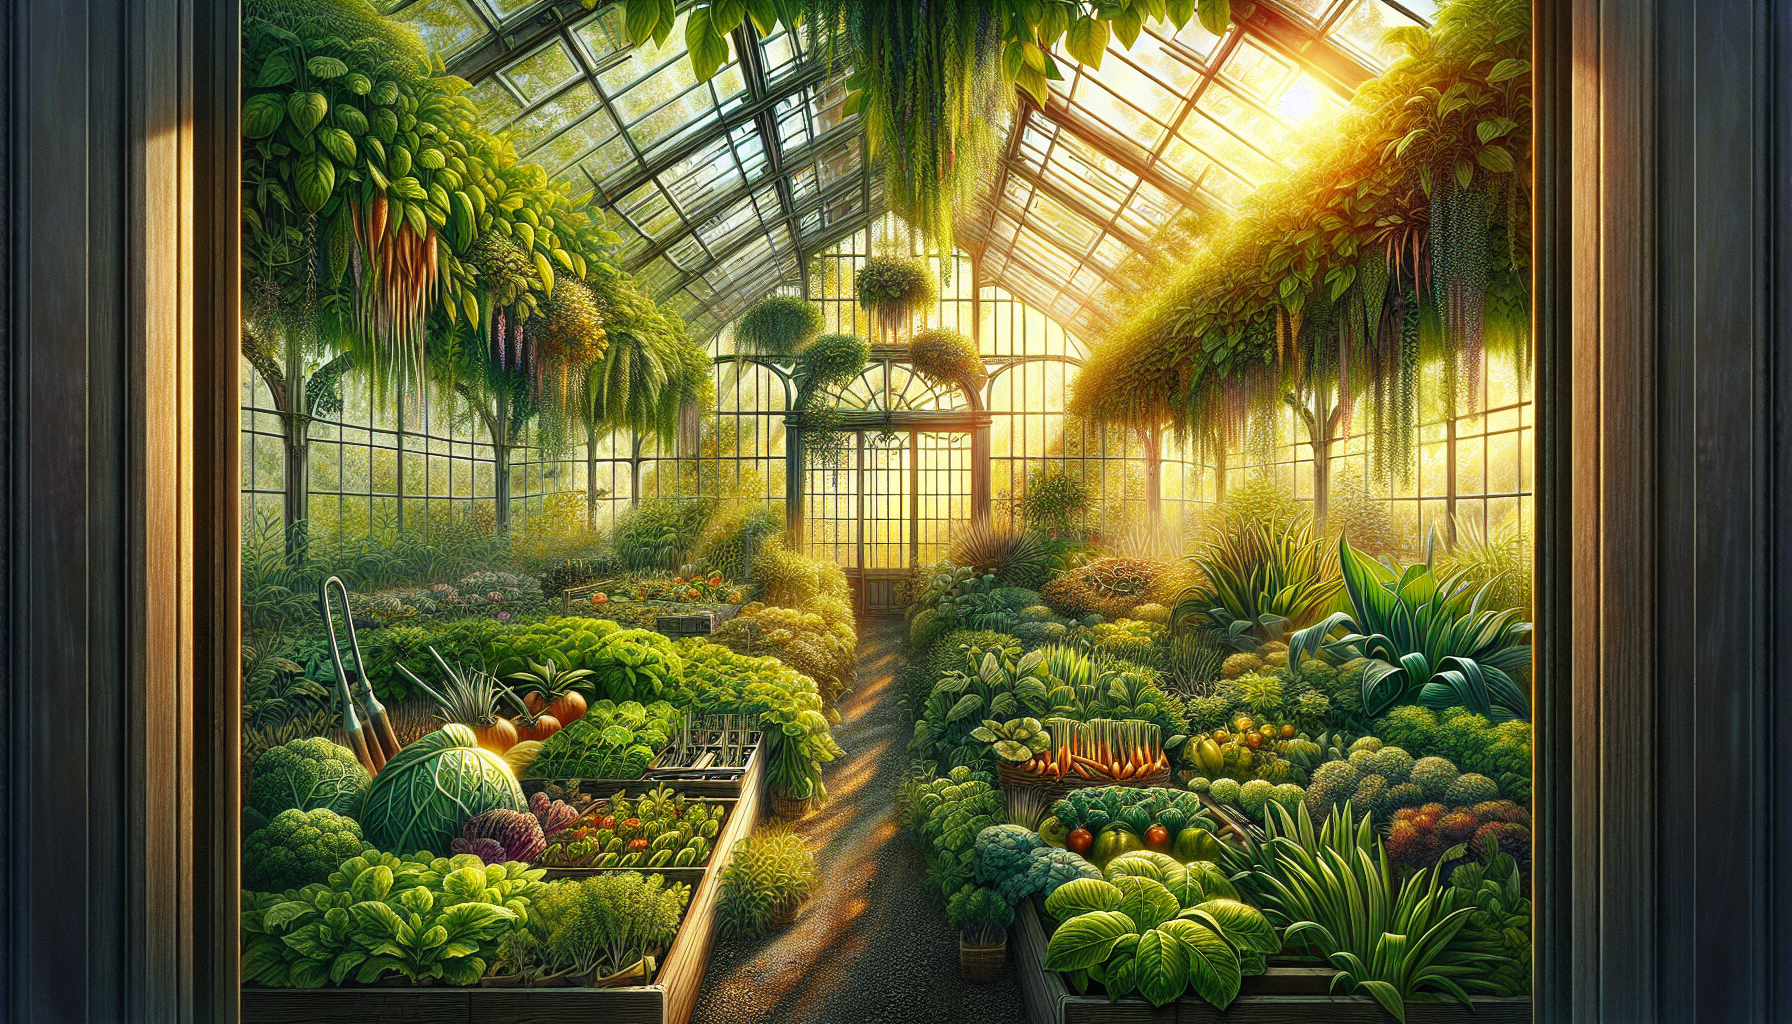 The Greenhouse Gardeners Manual